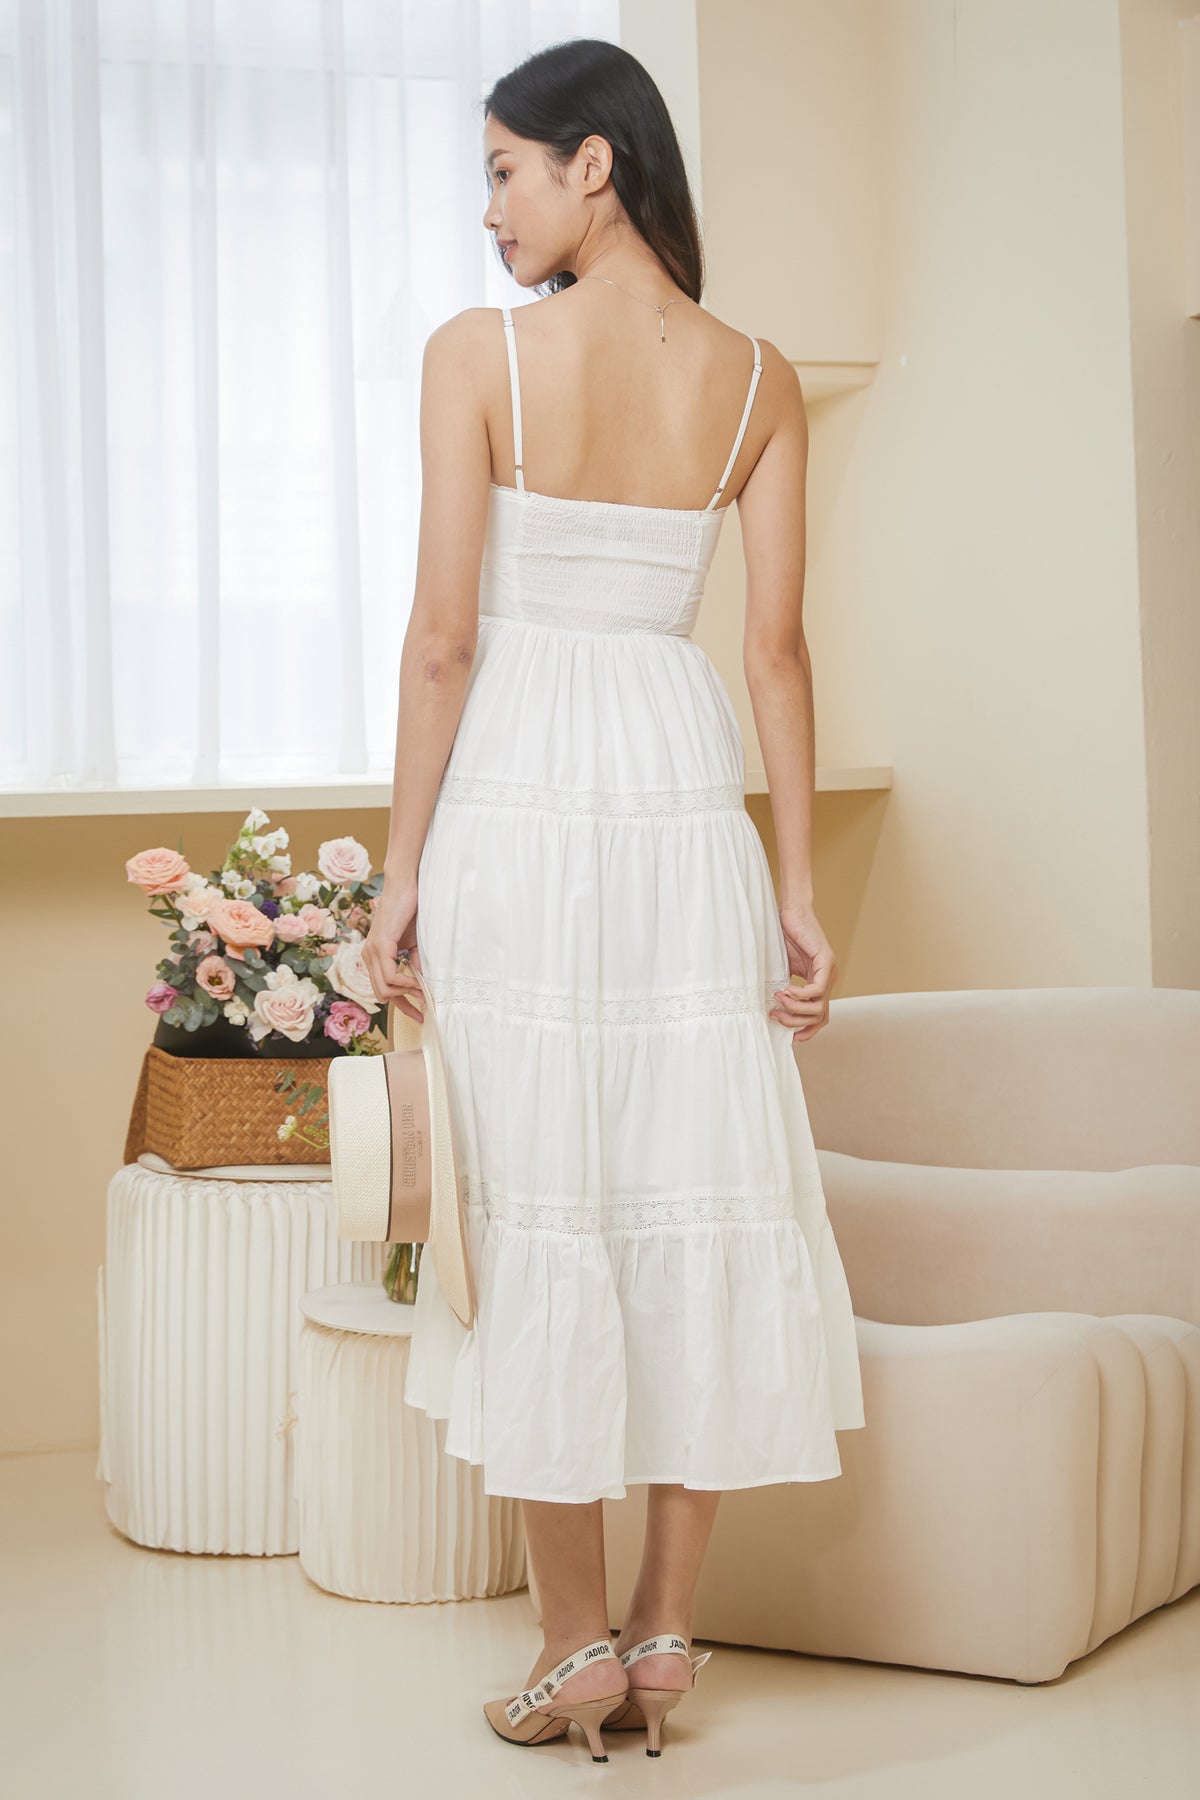 Freya Lace Trim Pintucked Dress in White